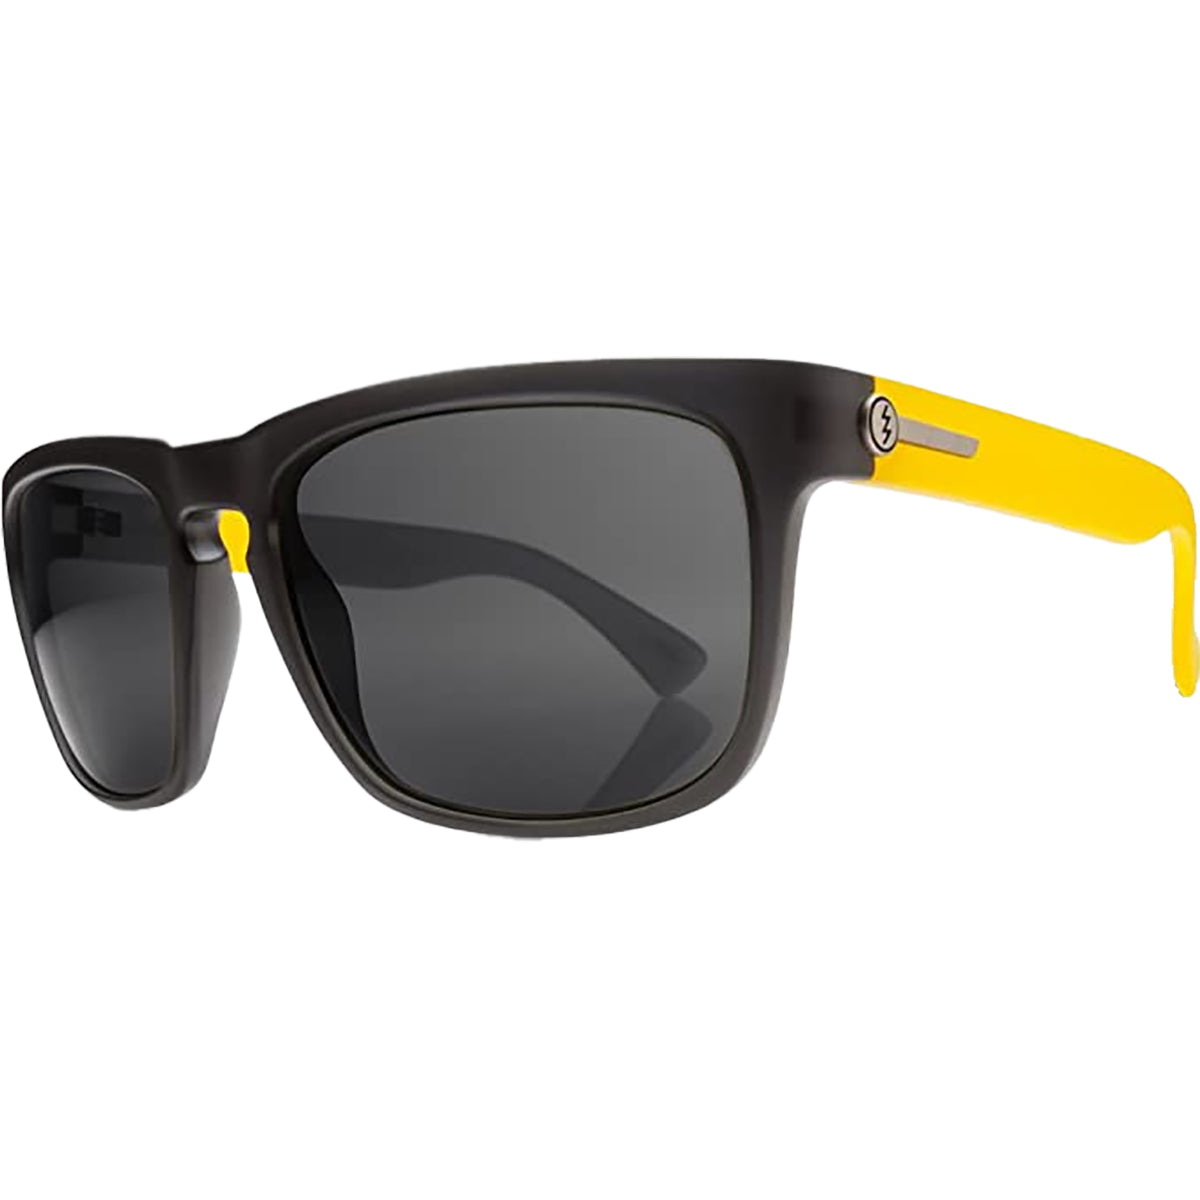 Electric Knoxville Men's Lifestyle Sunglasses-ES09001020